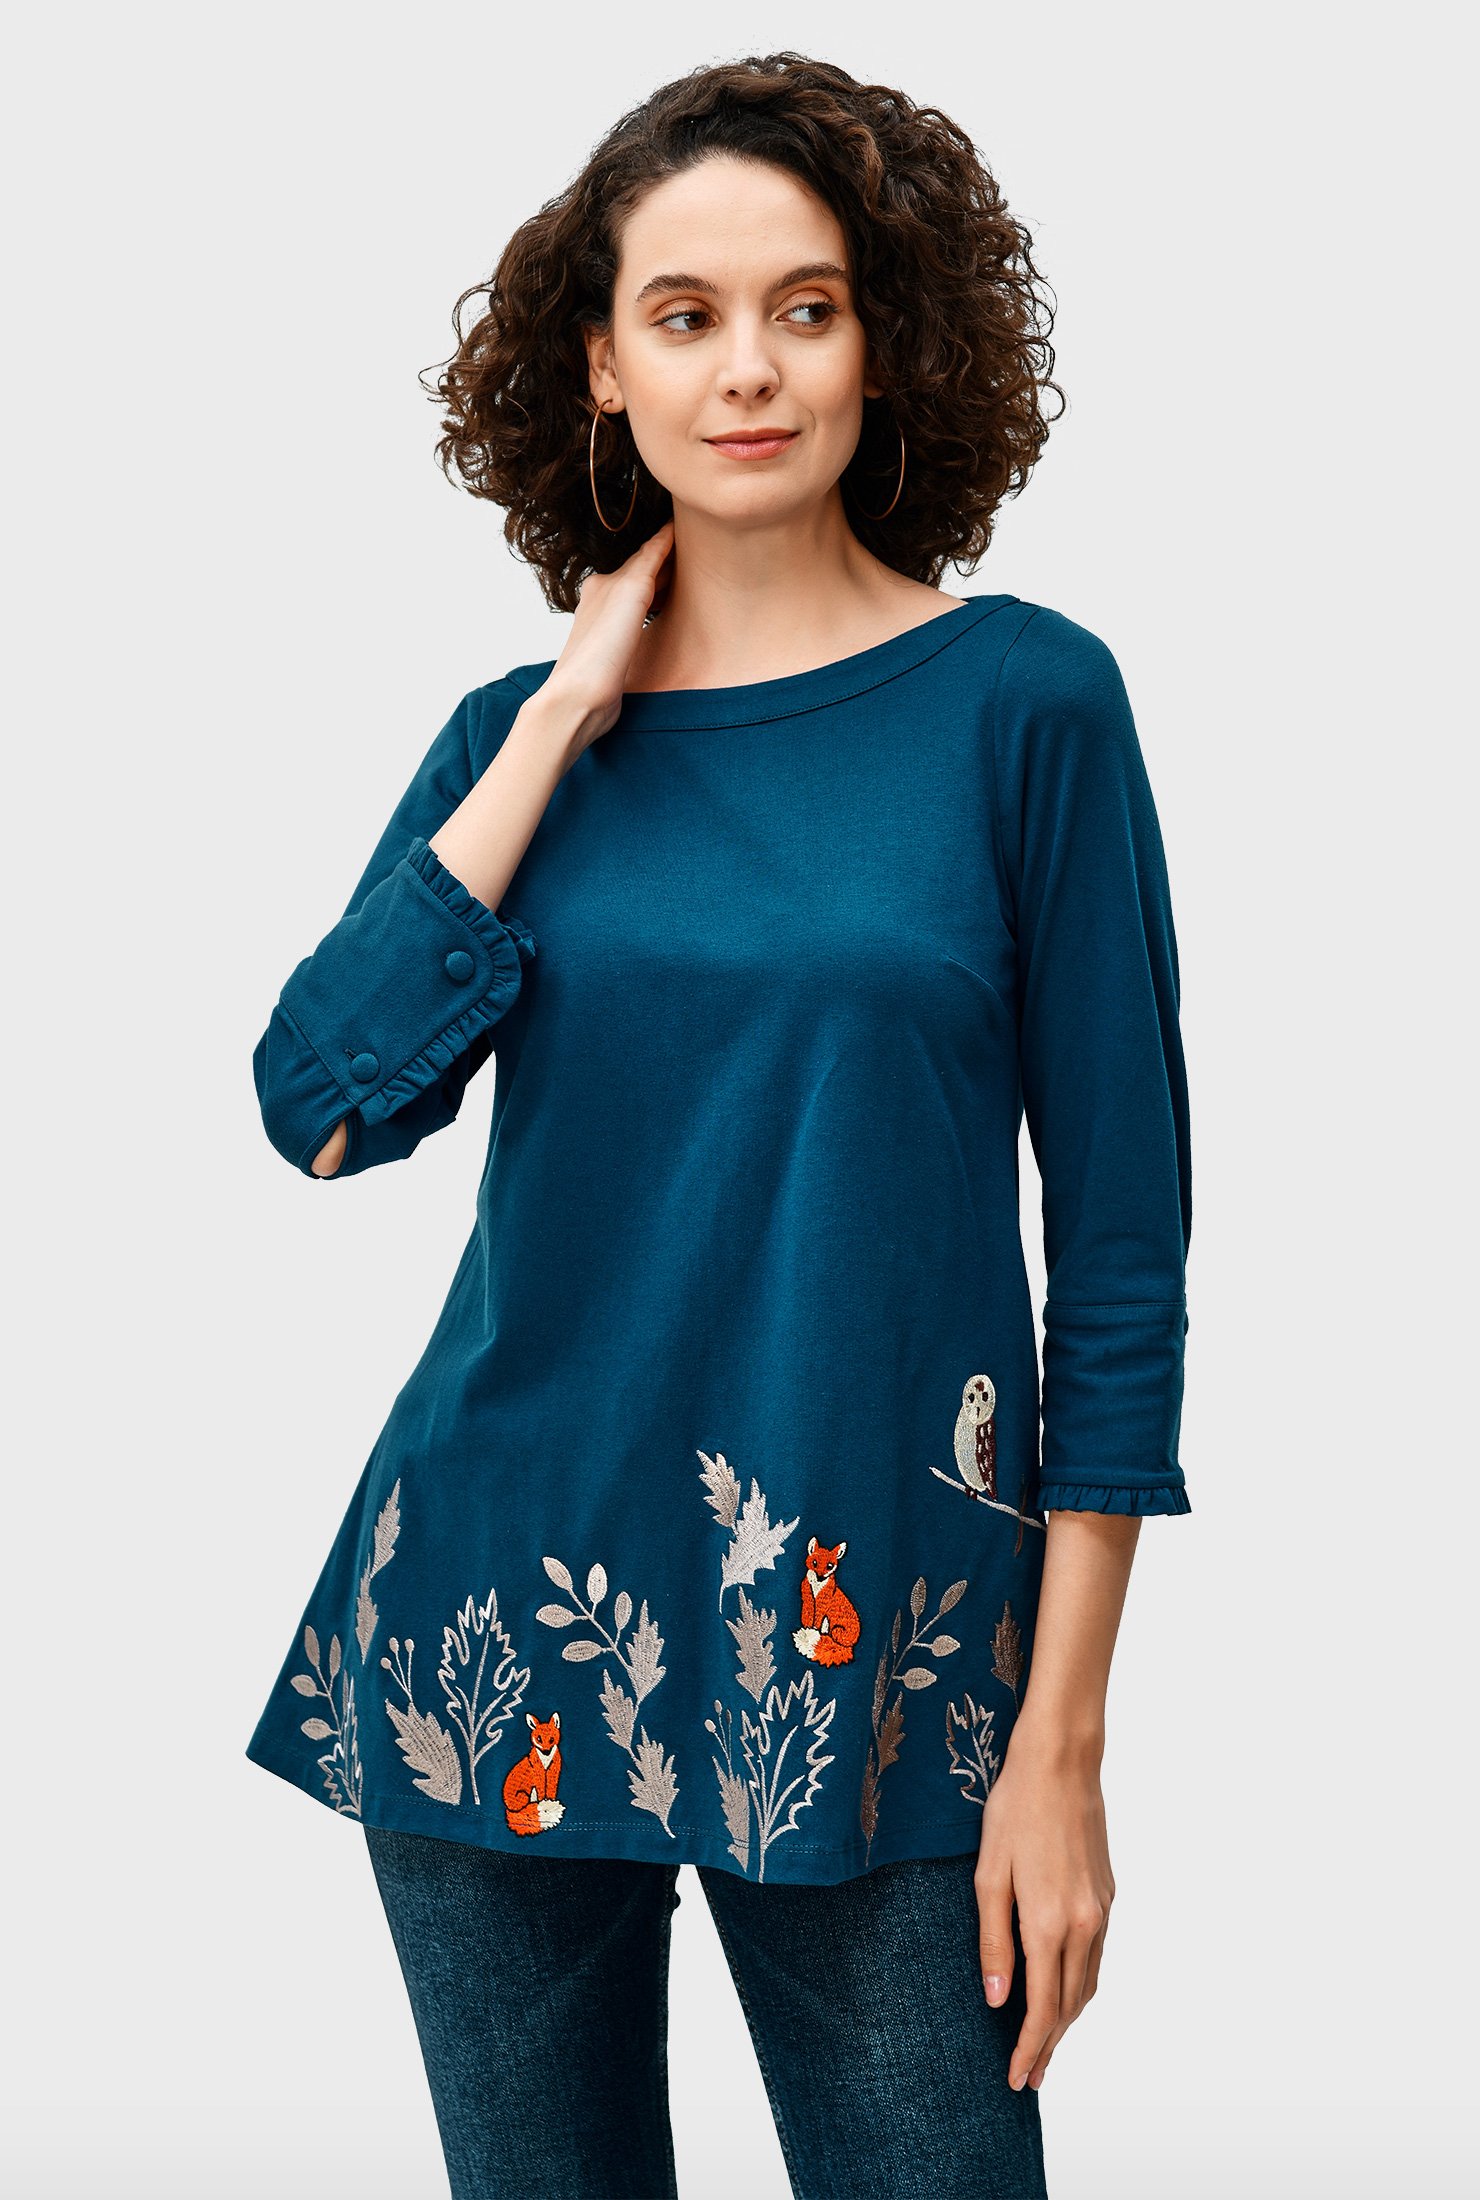 Shop Fox and owl embroidery cotton jersey tunic | eShakti